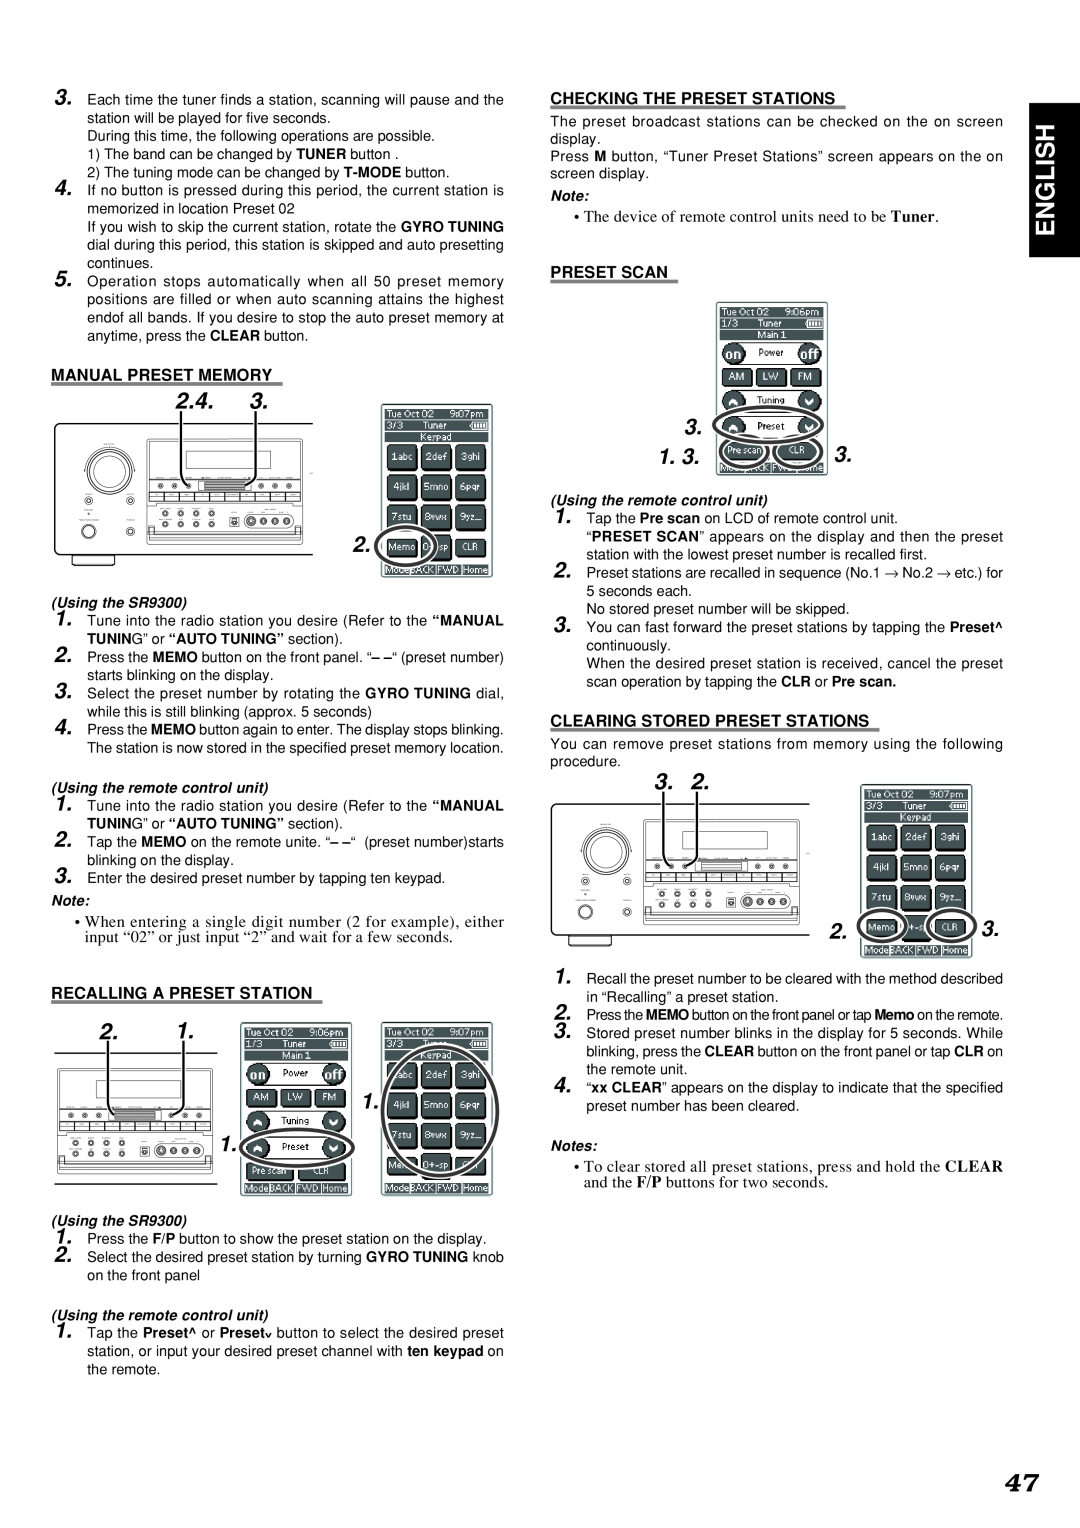 Marantz SR9300 manual 2.4.3, Manual Preset Memory, Recalling A Preset Station, Checking The Preset Stations, Preset Scan 